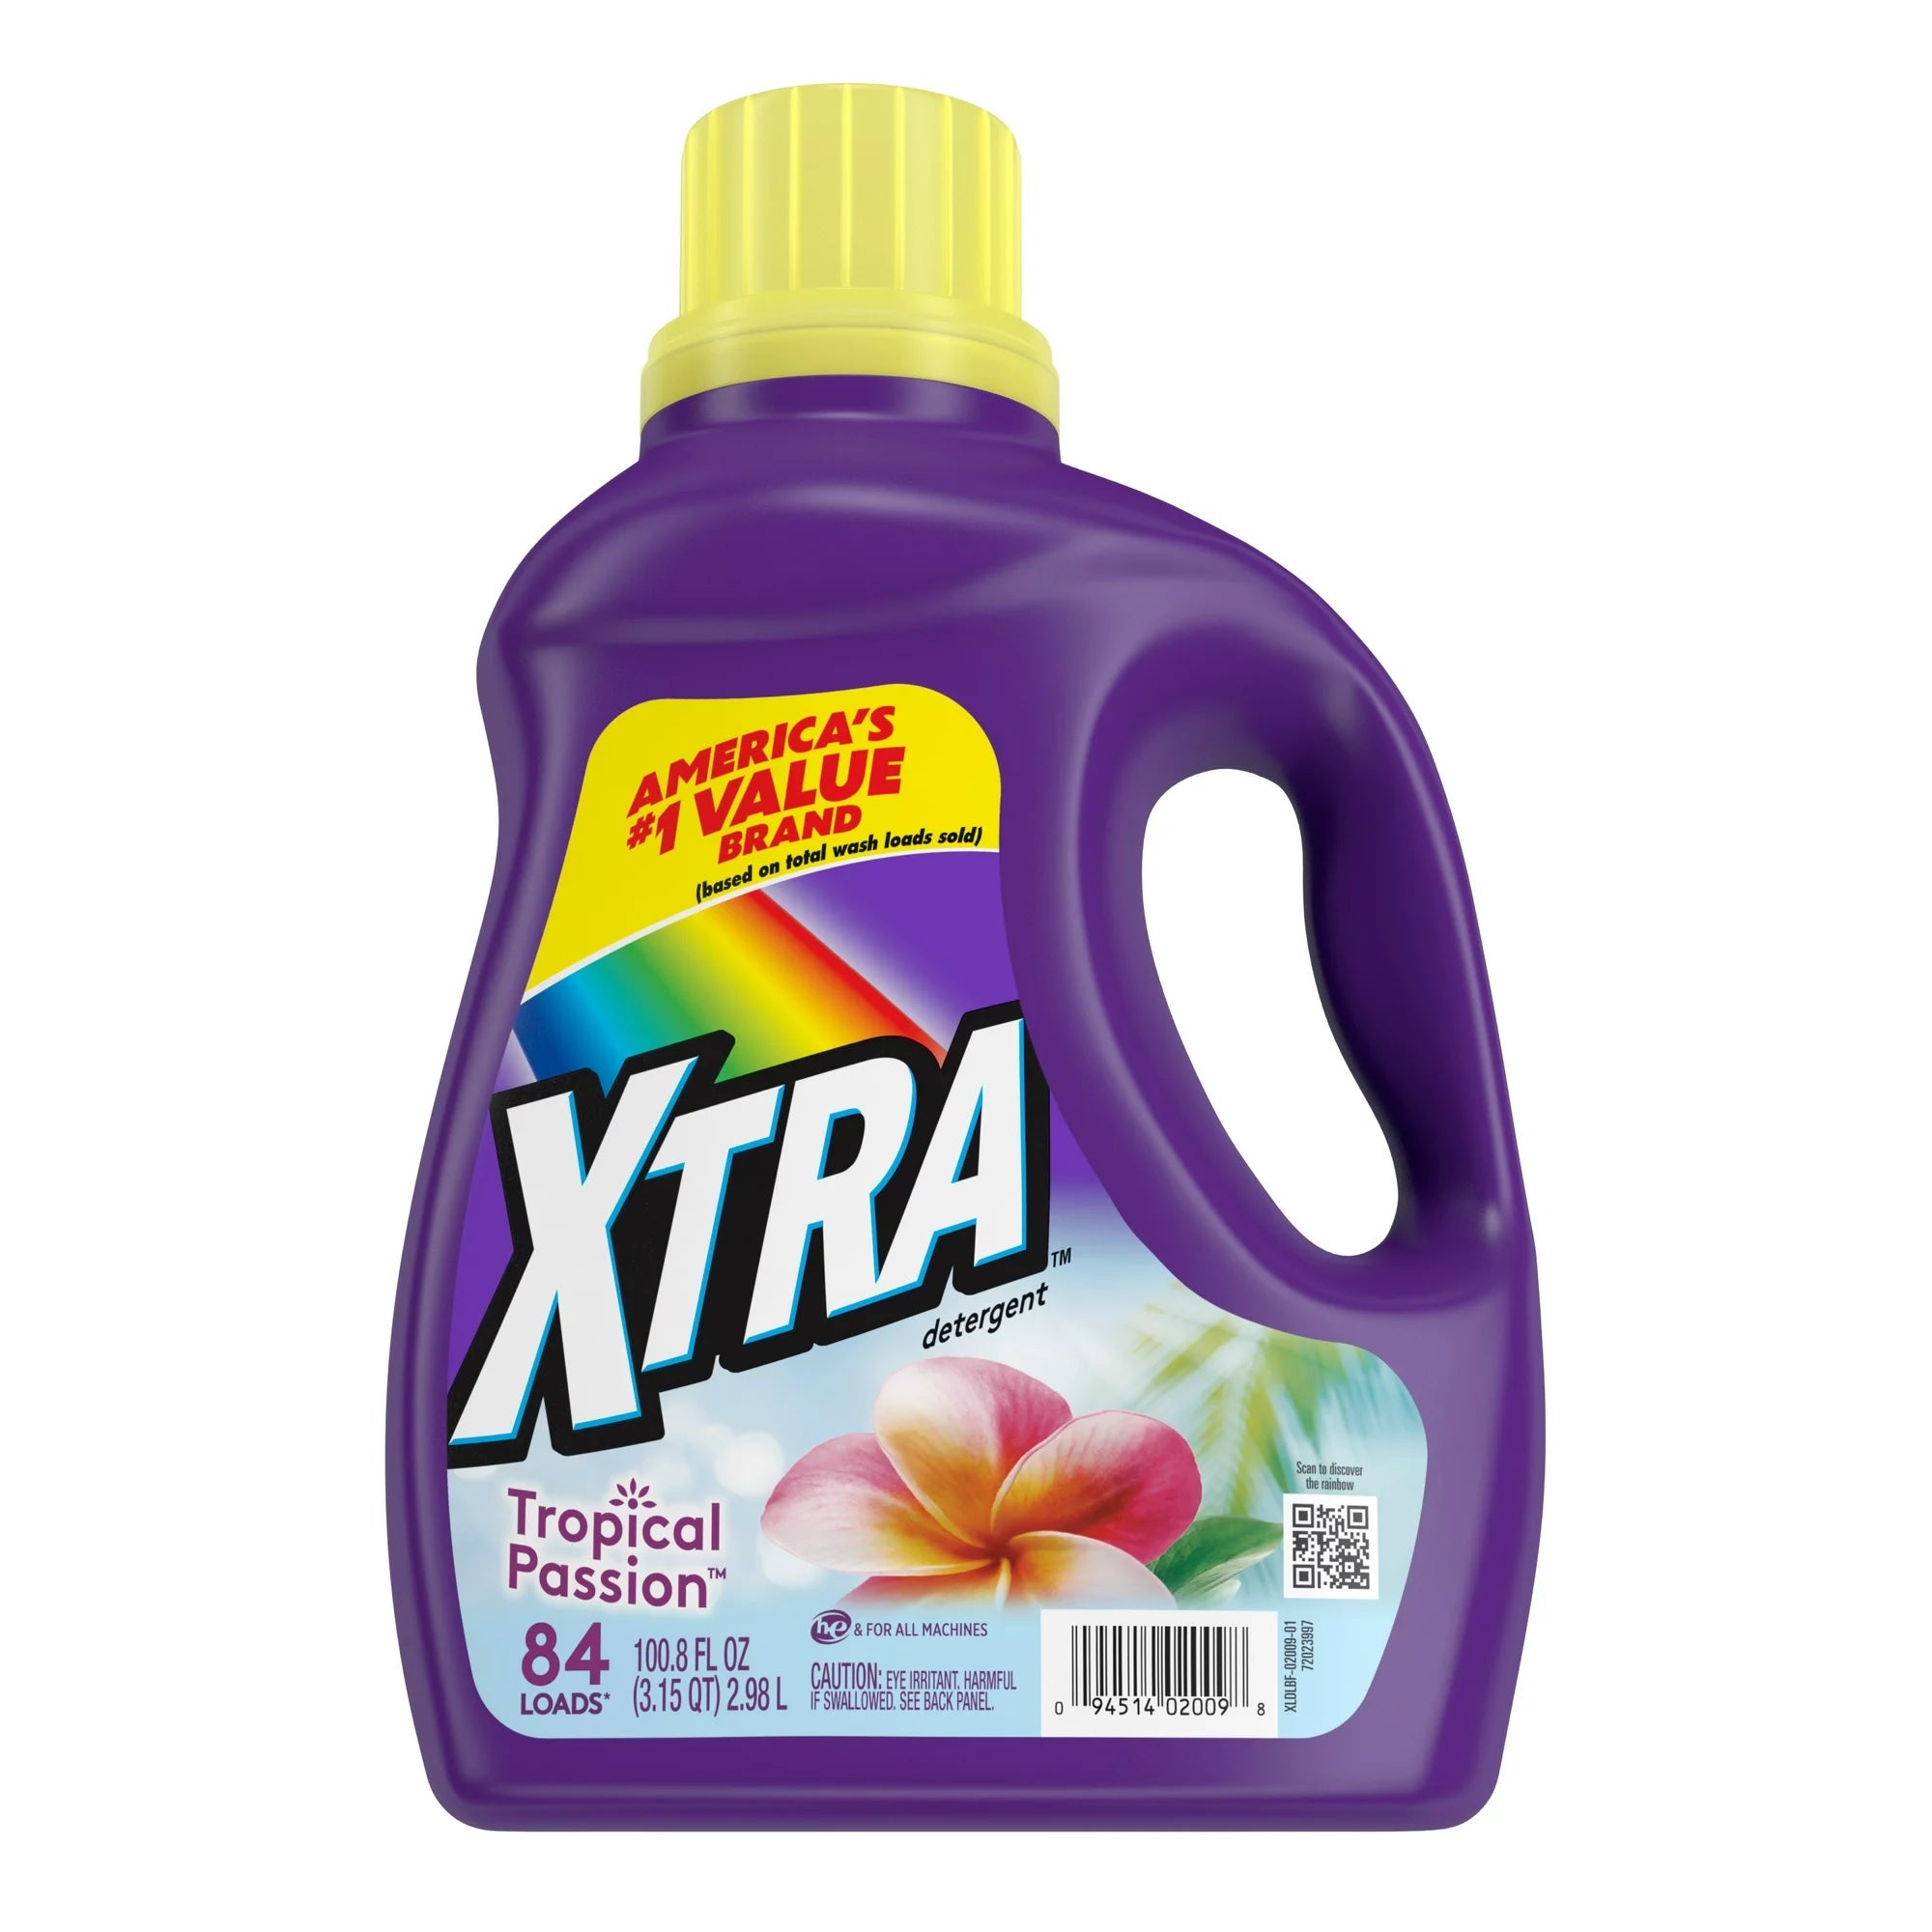 Xtra Liquid Laundry Detergent Tropical Passion - 100.8oz/4pk